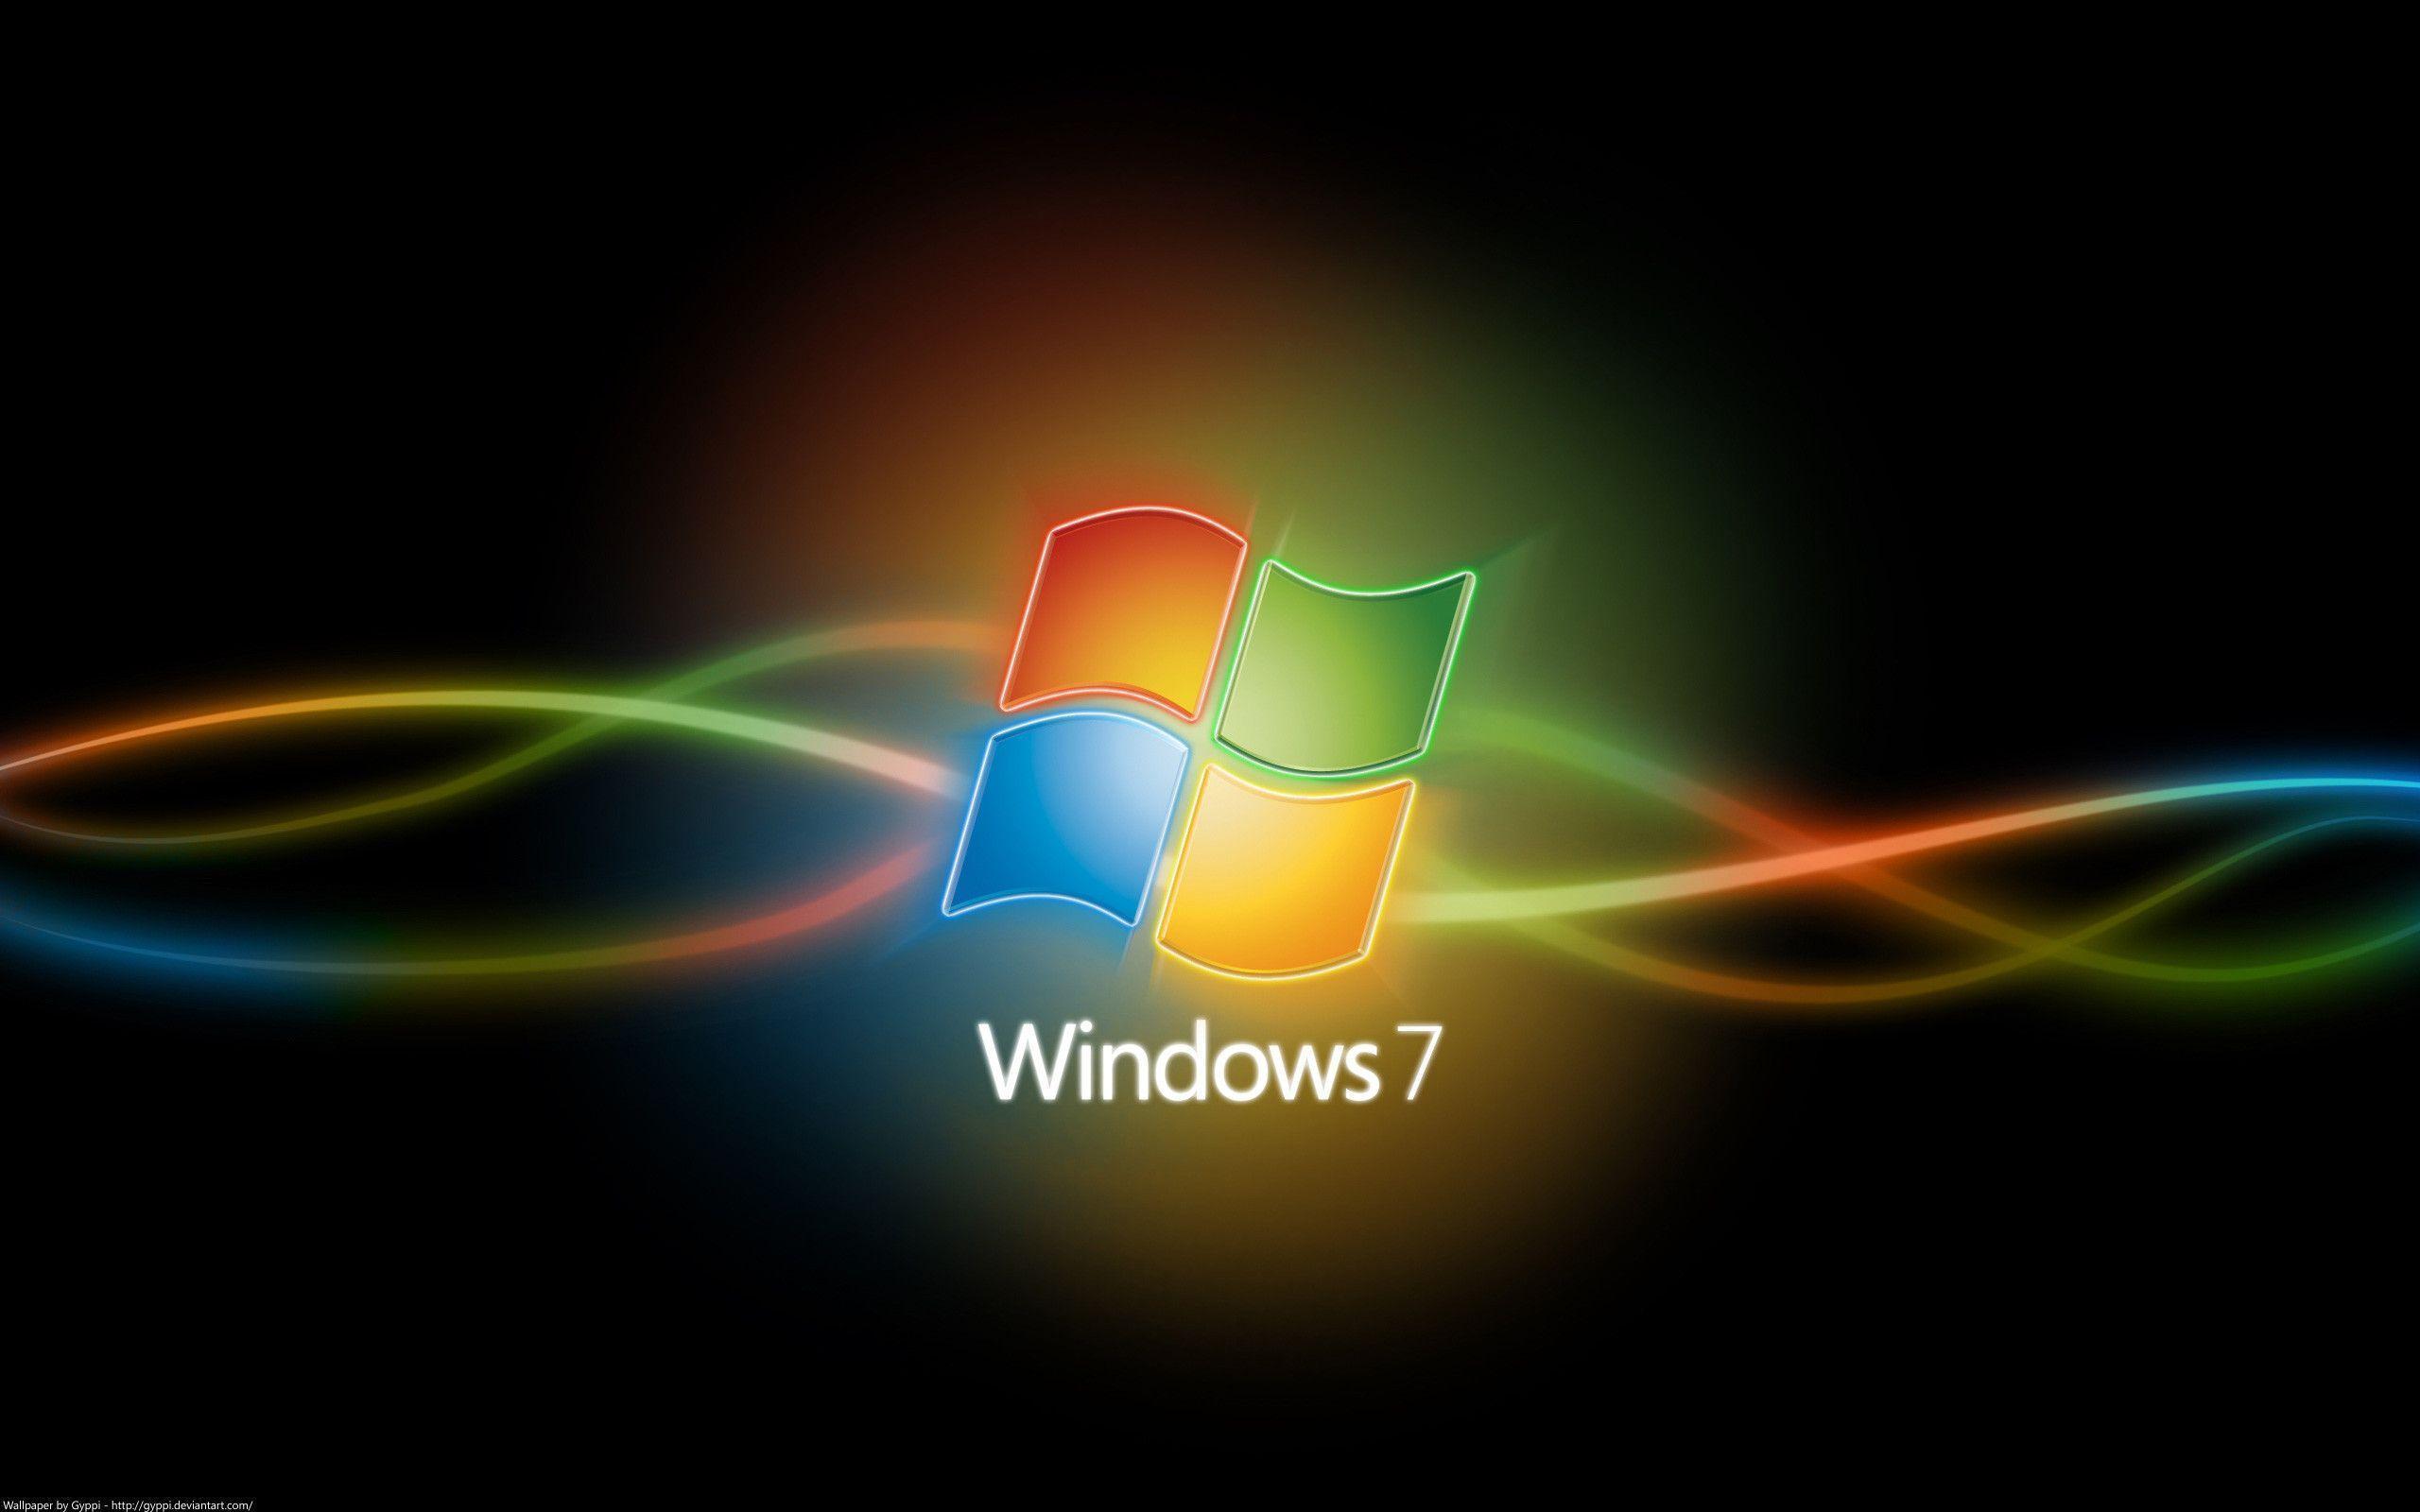 Free 3D Desktop Background Windows 7 Wallpaper